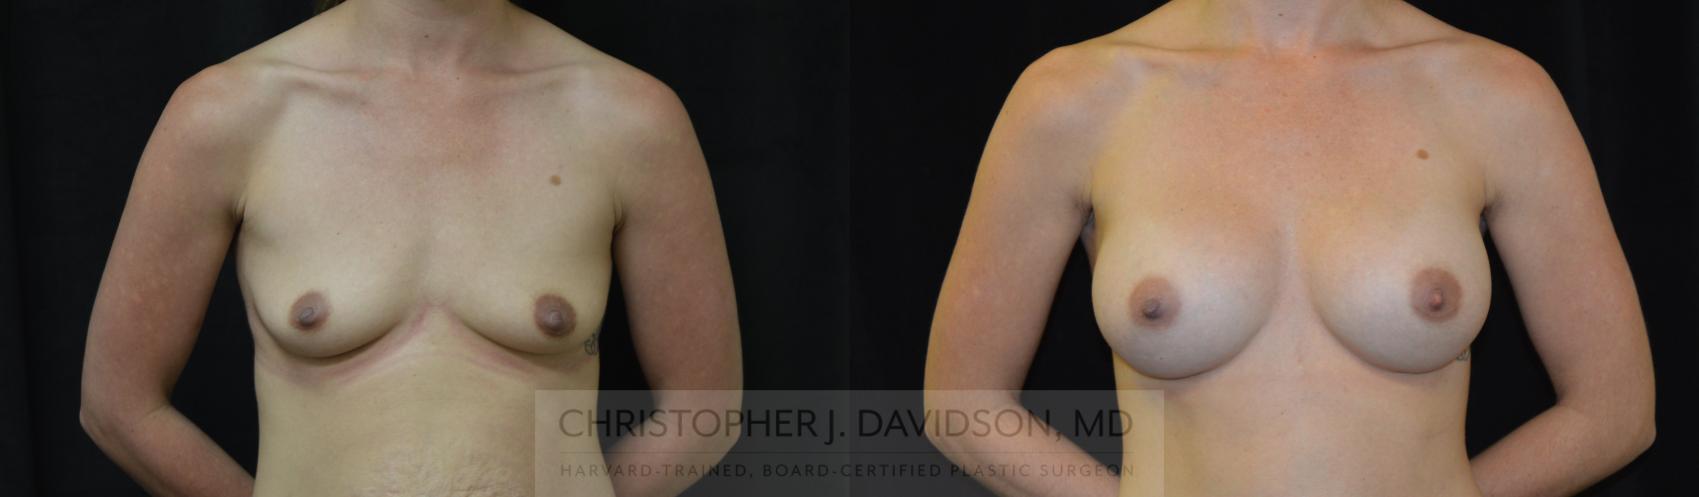 Breast Augmentation Case 257 Before & After Front | Wellesley, MA | Christopher J. Davidson, MD